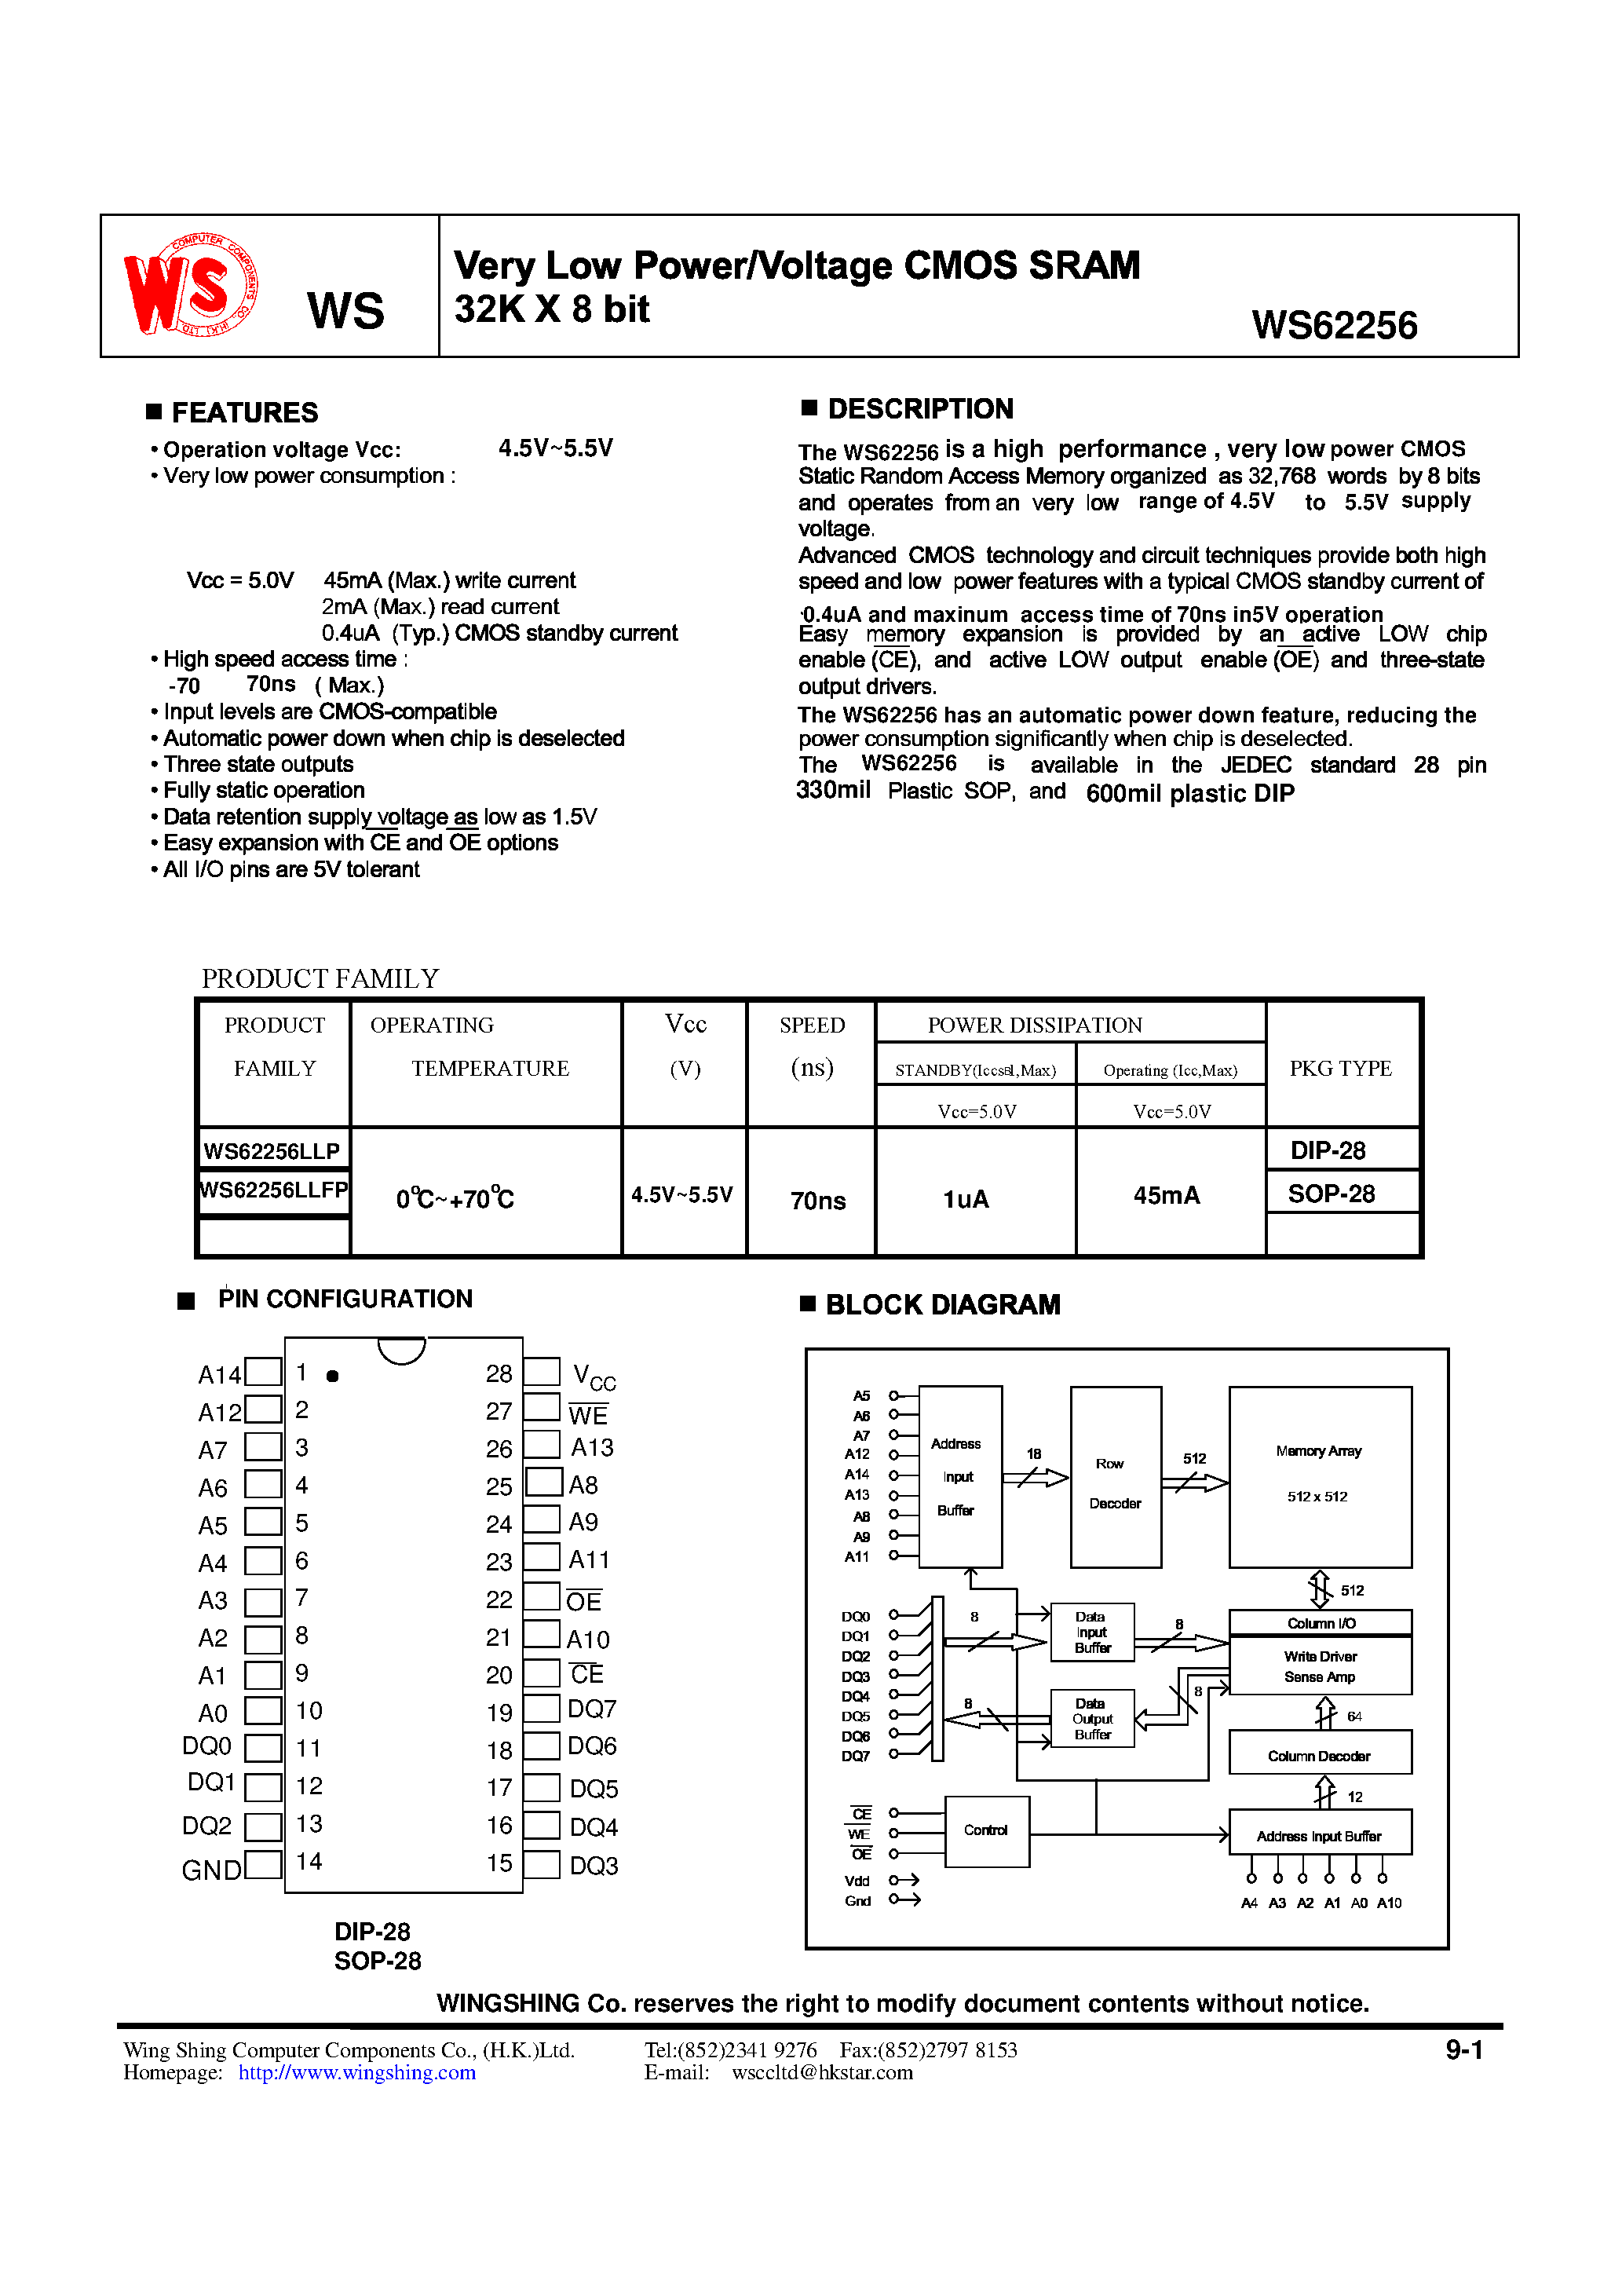 Даташит WS62256 - Very Low Power / Voltage CMOS SRAM 32K X 8bit страница 1